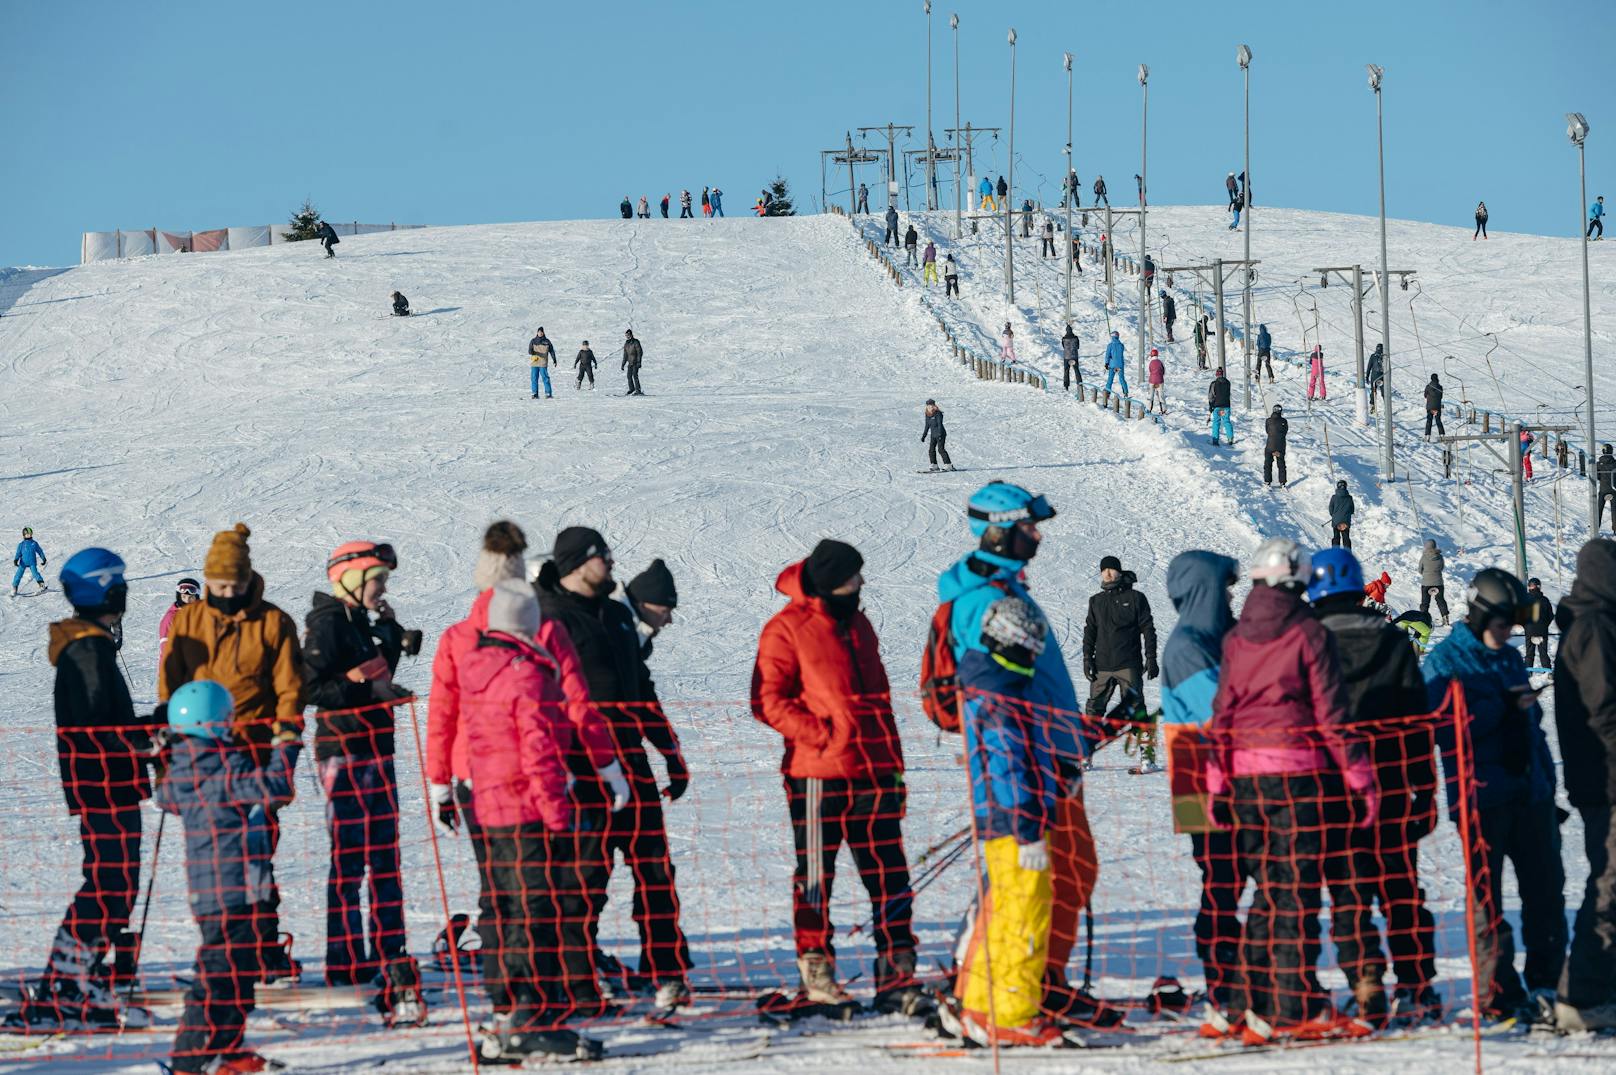 Großer Andrang im polnischen Skigebiet Zakopane